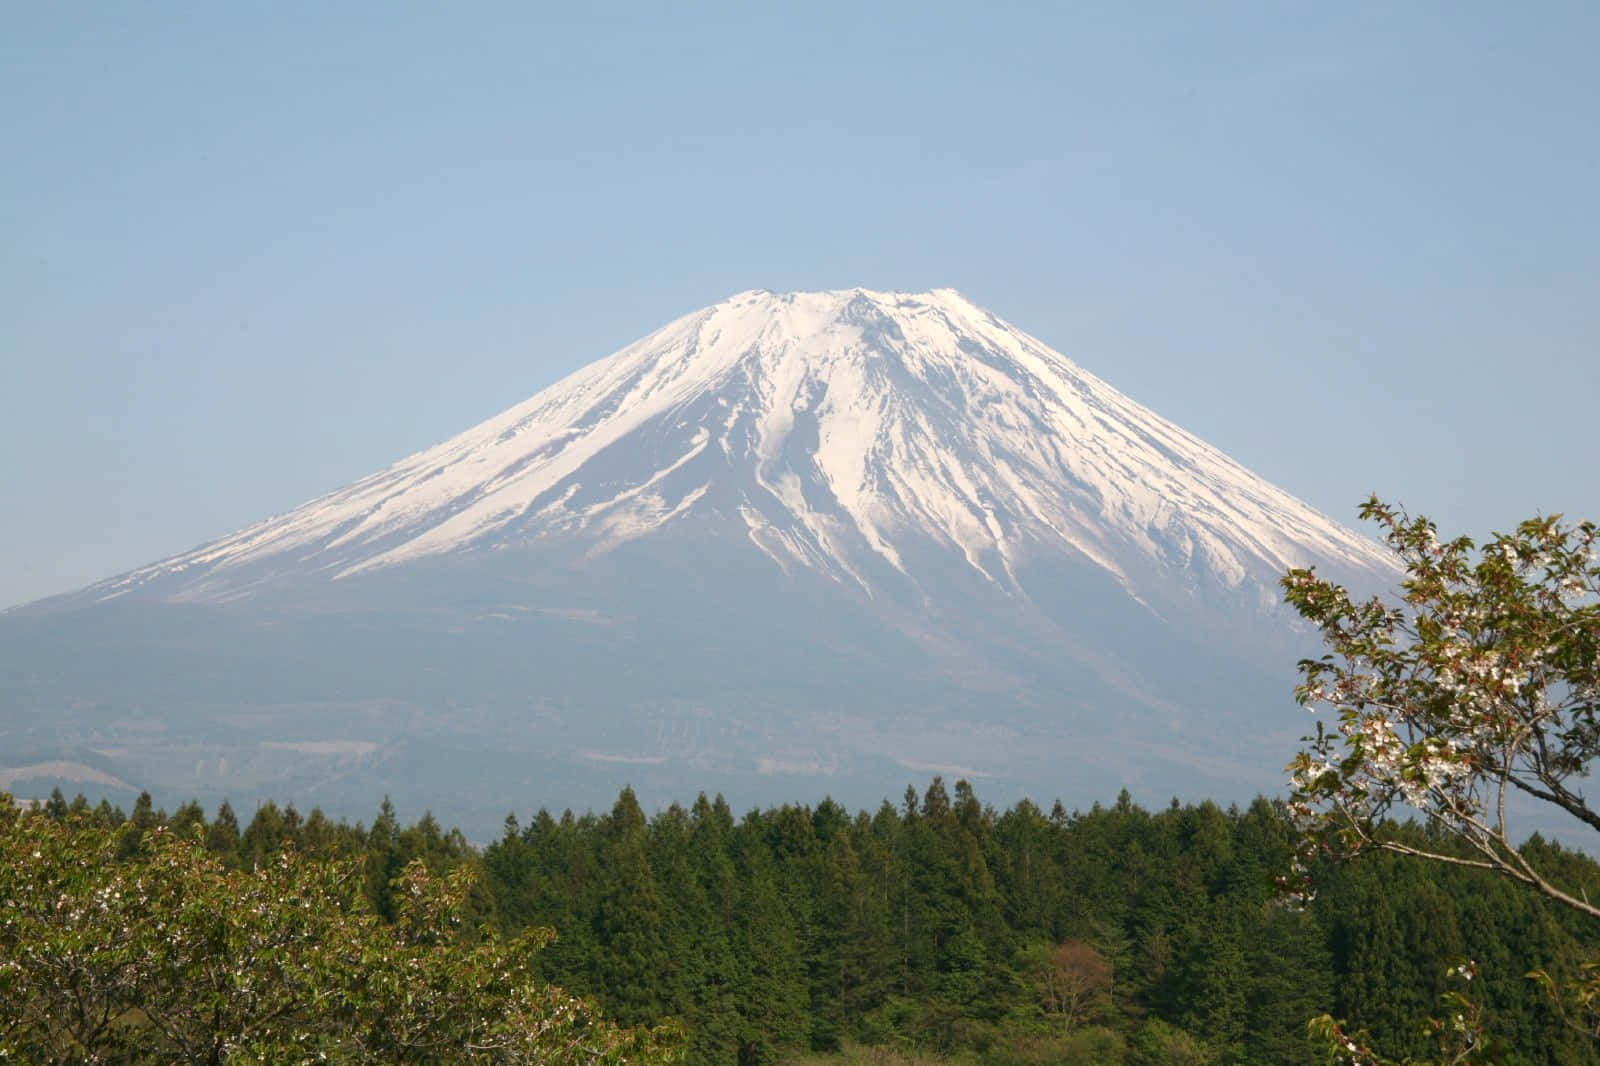 The majestic Mt. Fuji in its glory